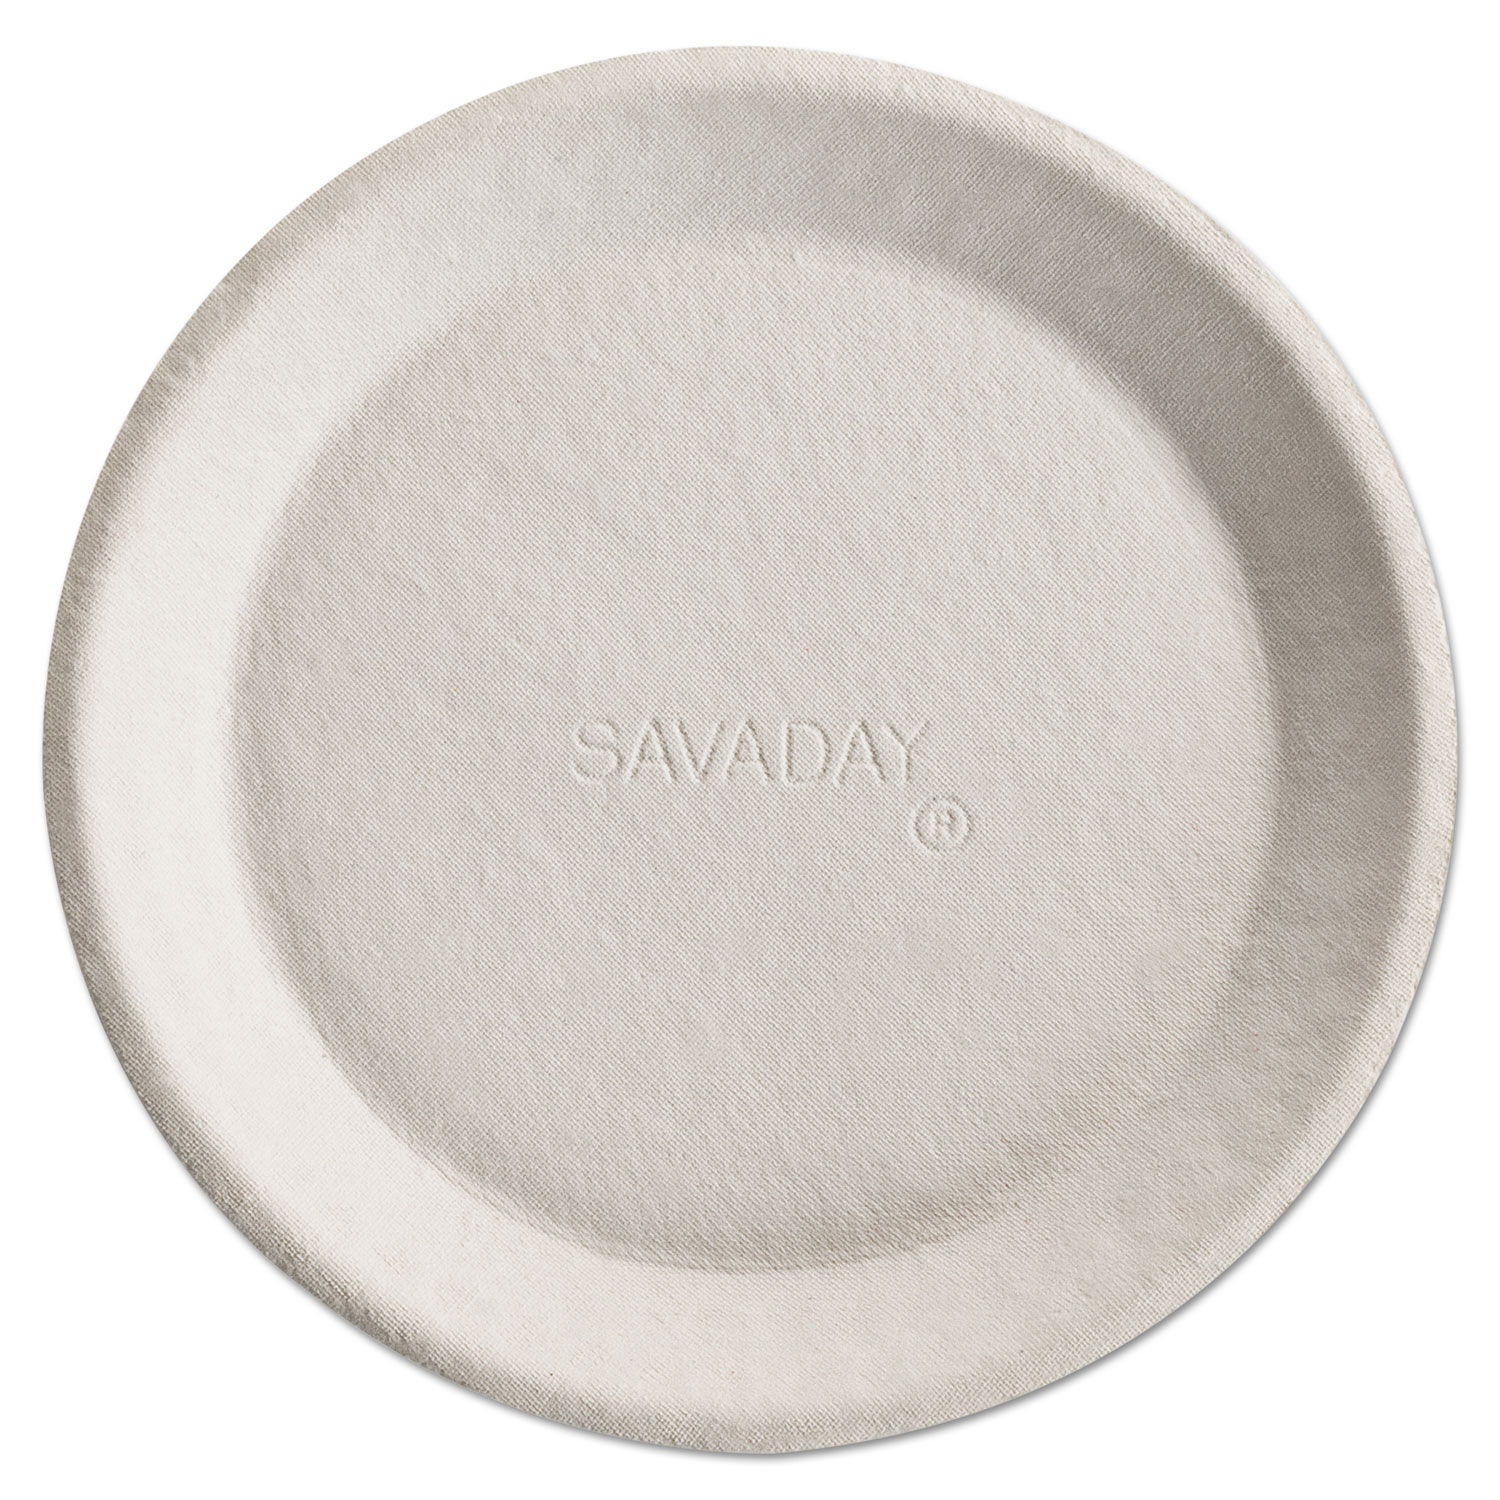  Chinet 10117 Savaday Molded Fiber Plates, 10, Cream, Round, 500/Carton (HUH10117) 